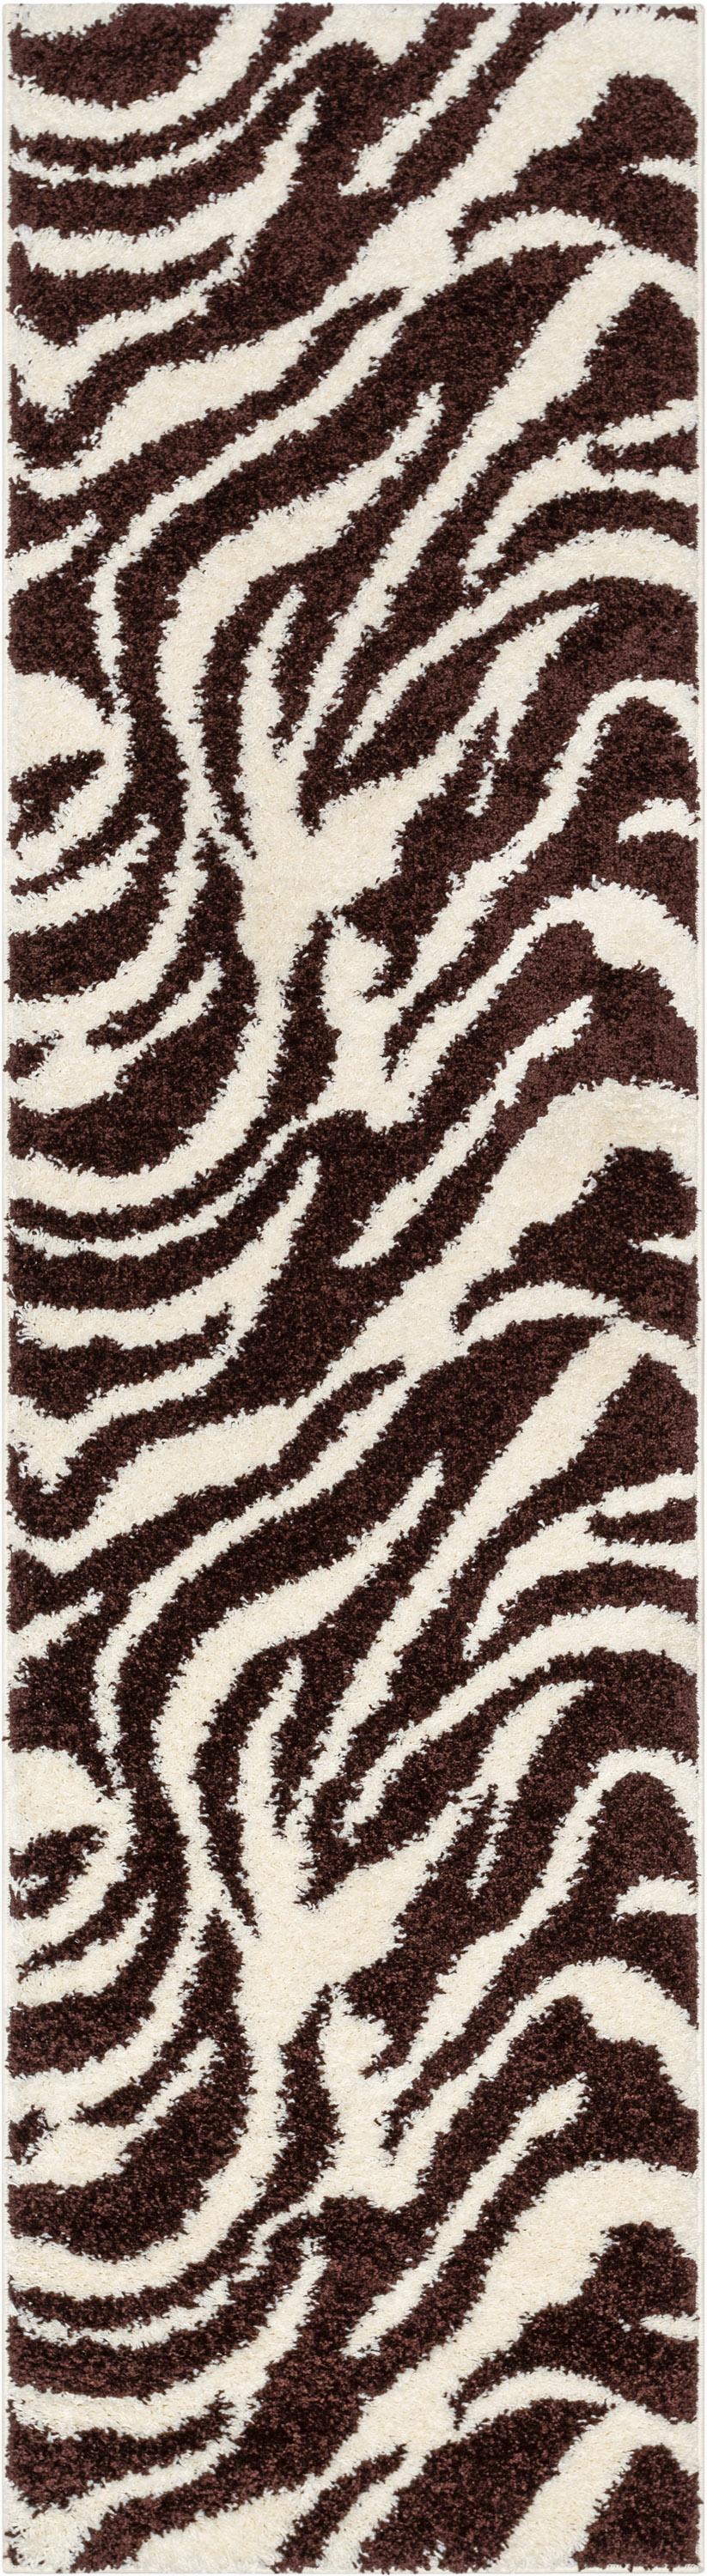 Well Woven Mazie Animal Print (2'7" x 9'10") Shag Zebra Brown Ivory Runner Rug - image 2 of 7